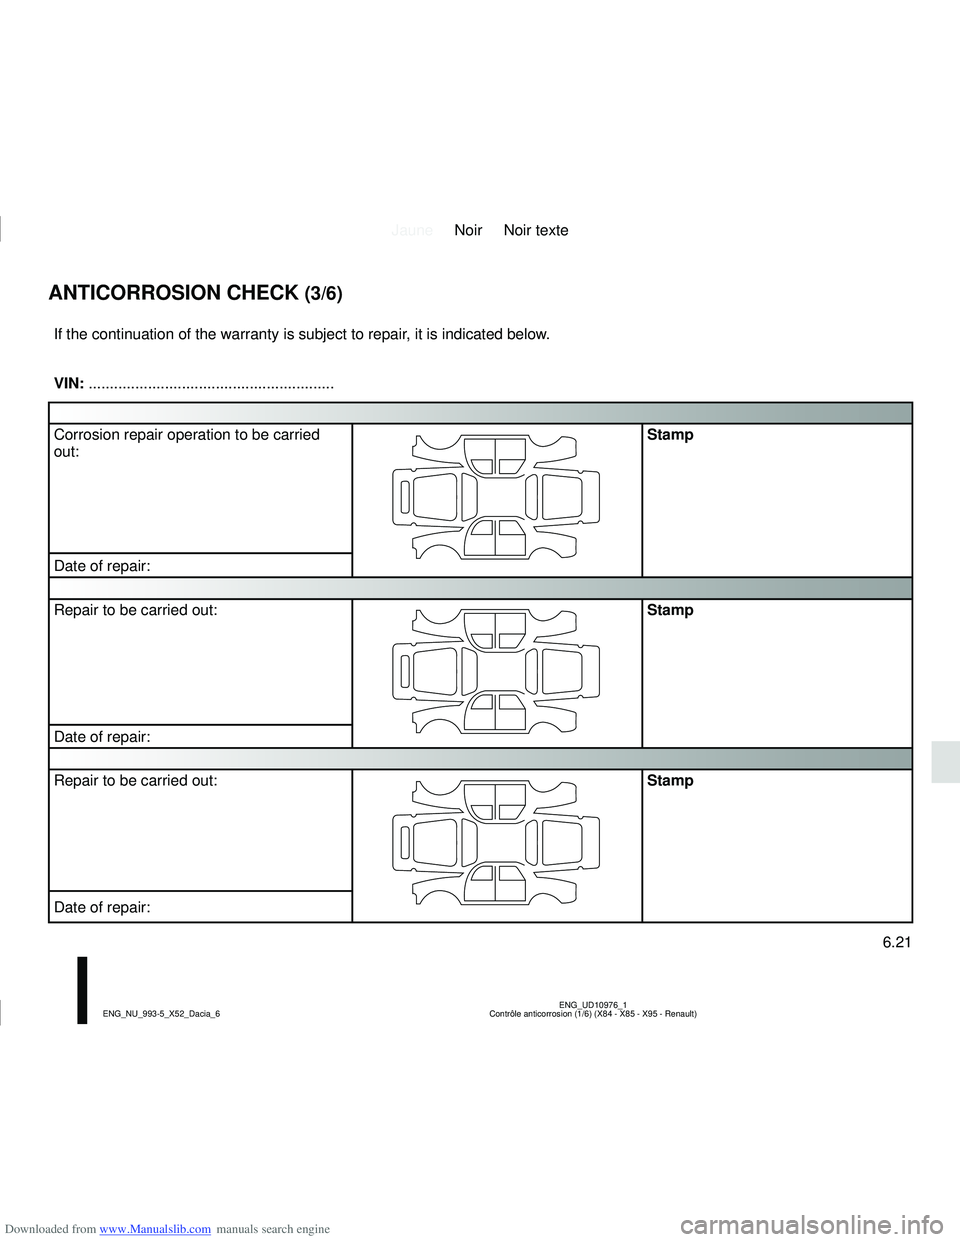 DACIA LOGAN 2021 Manual PDF Downloaded from www.Manualslib.com manuals search engine JauneNoir Noir texte
6.21
ENG_UD10976_1
Contrôle anticorrosion (1/6) (X84 - X85 - X95 - Renault)
ENG_NU_993-5_X52_Dacia_6
ANTICORROSION CHECK 